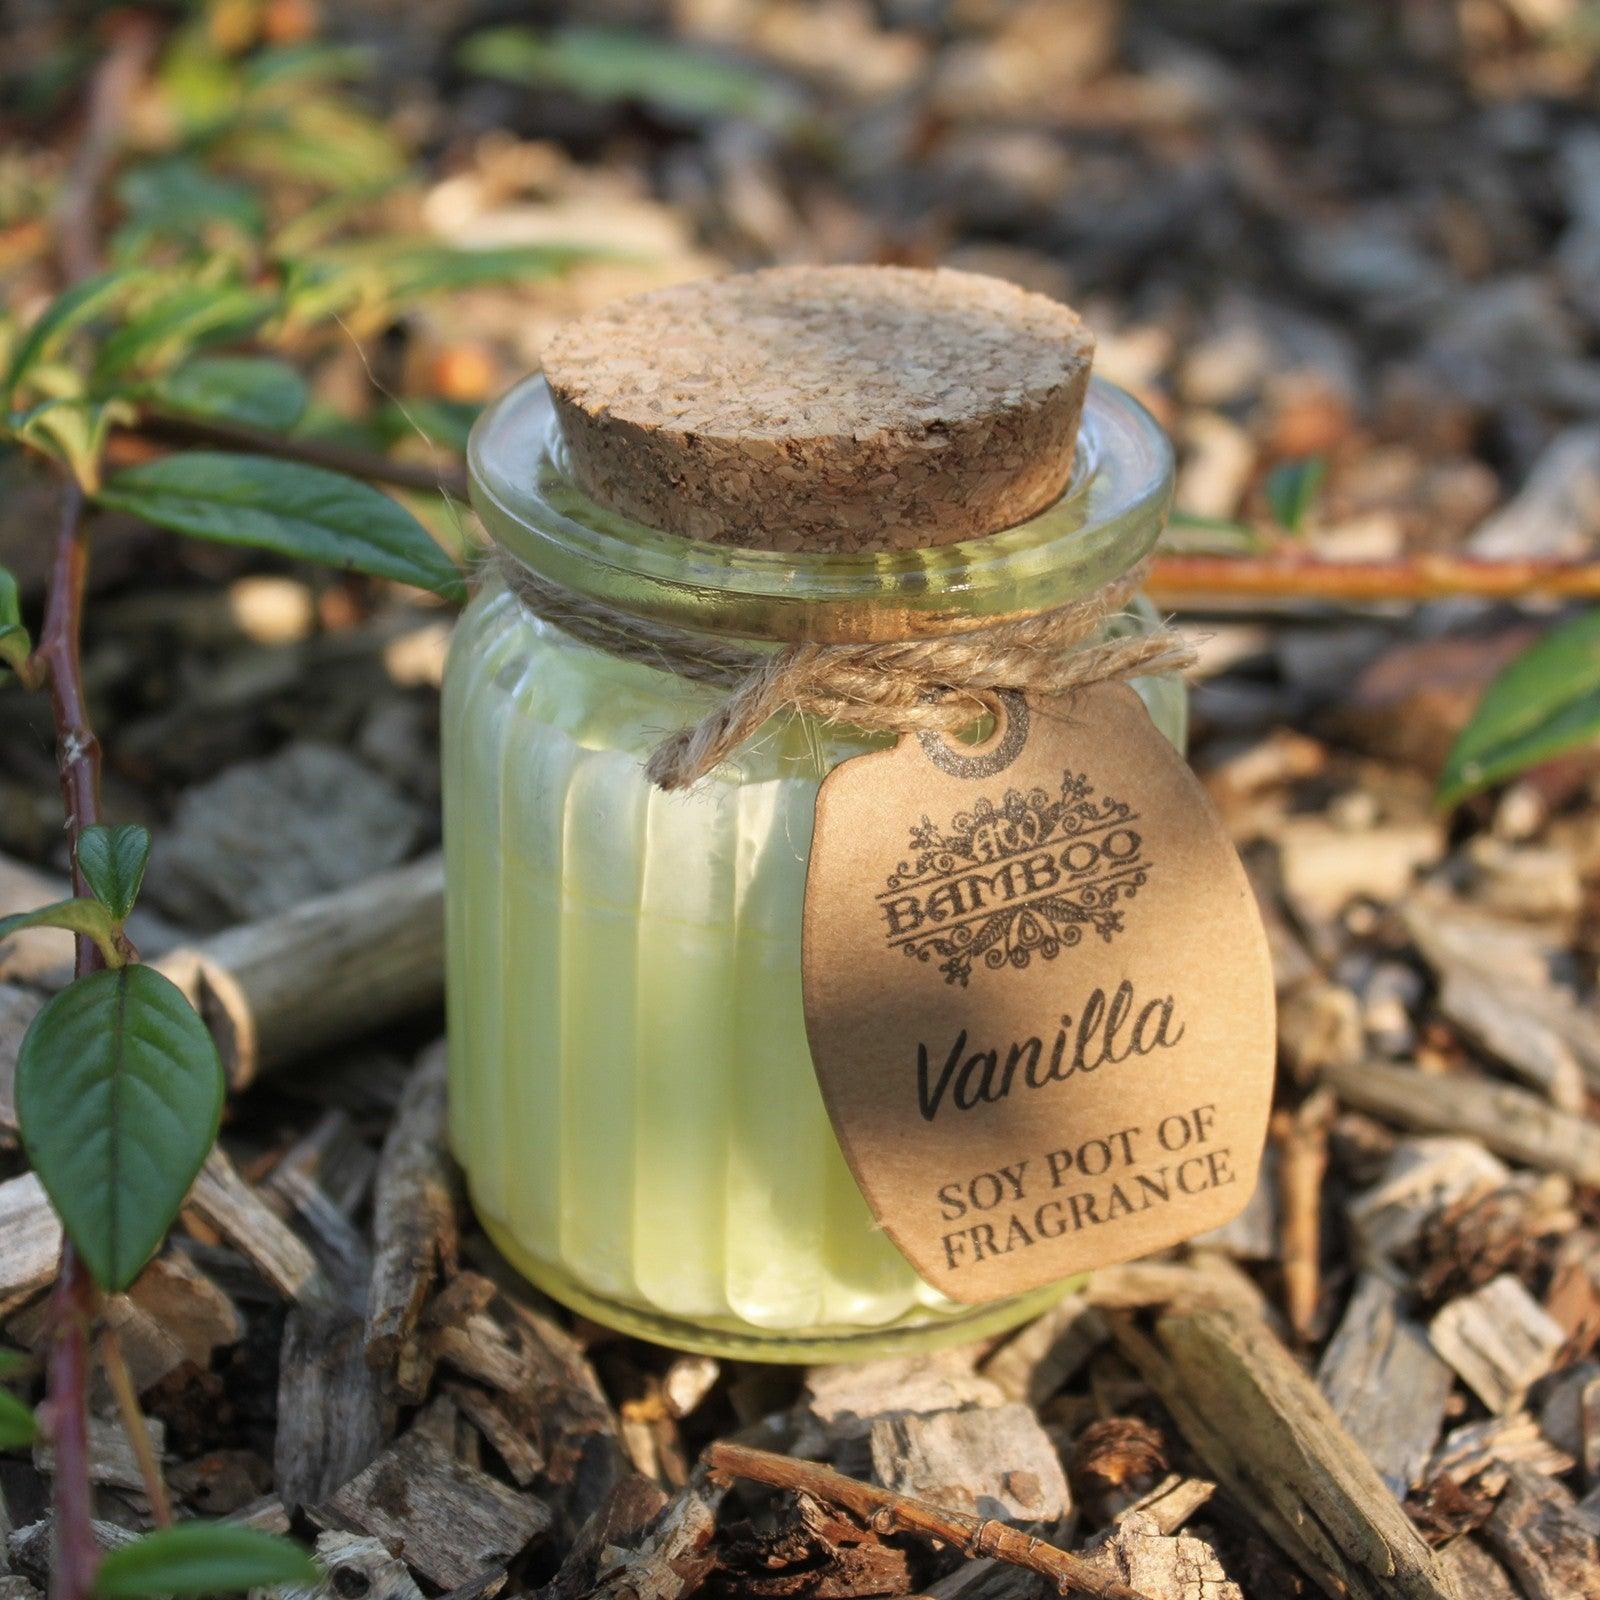 Vanilla Soy Pot of Fragrance Candles - DuvetDay.co.uk